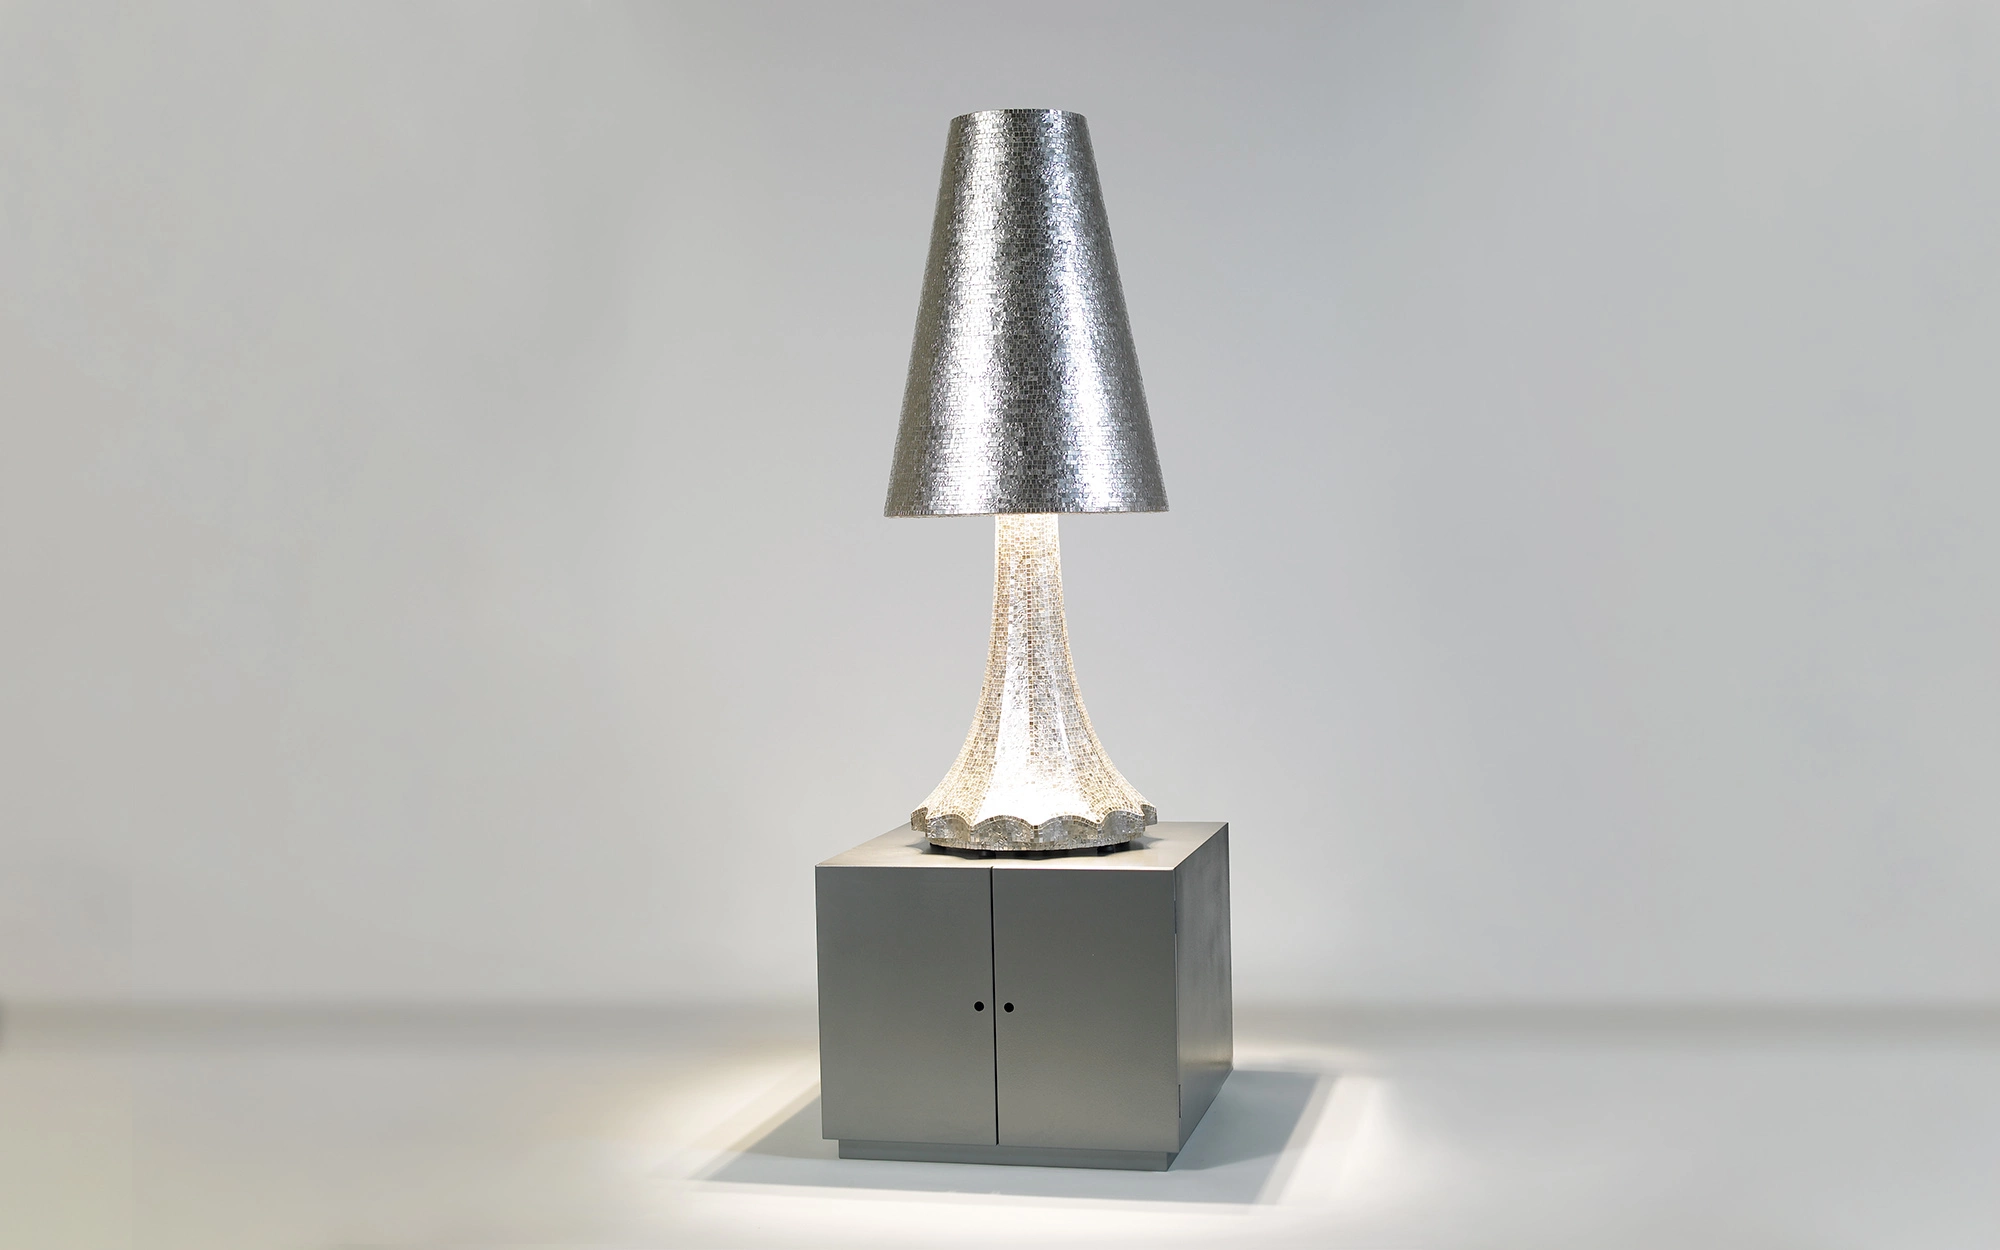 Lampada white gold - Alessandro Mendini - Mirror - Galerie kreo